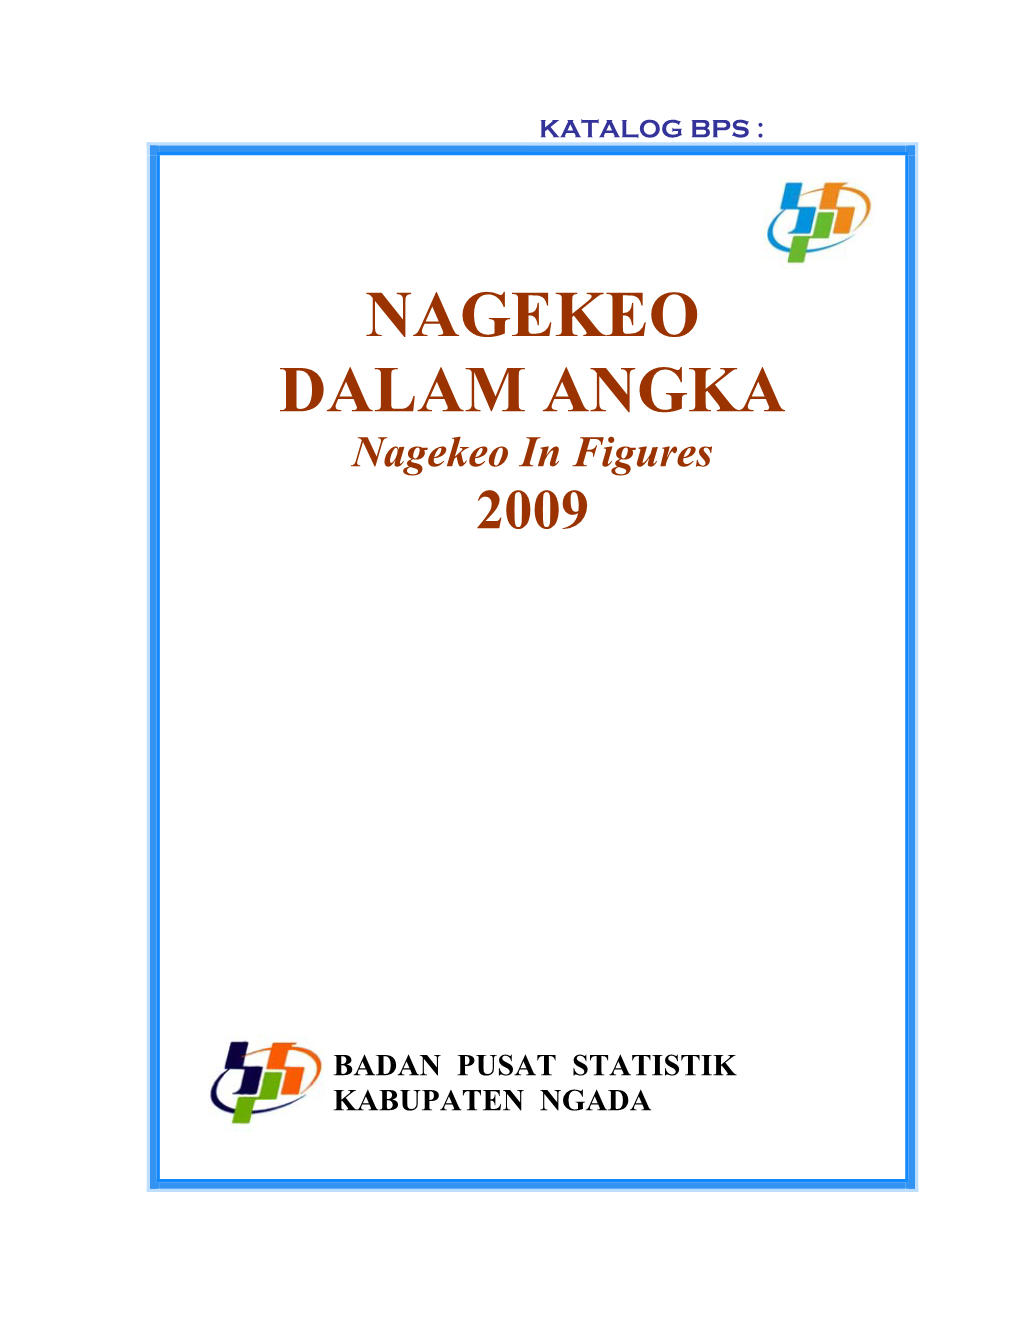 NAGEKEO DALAM ANGKA Nagekeo in Figures 2009